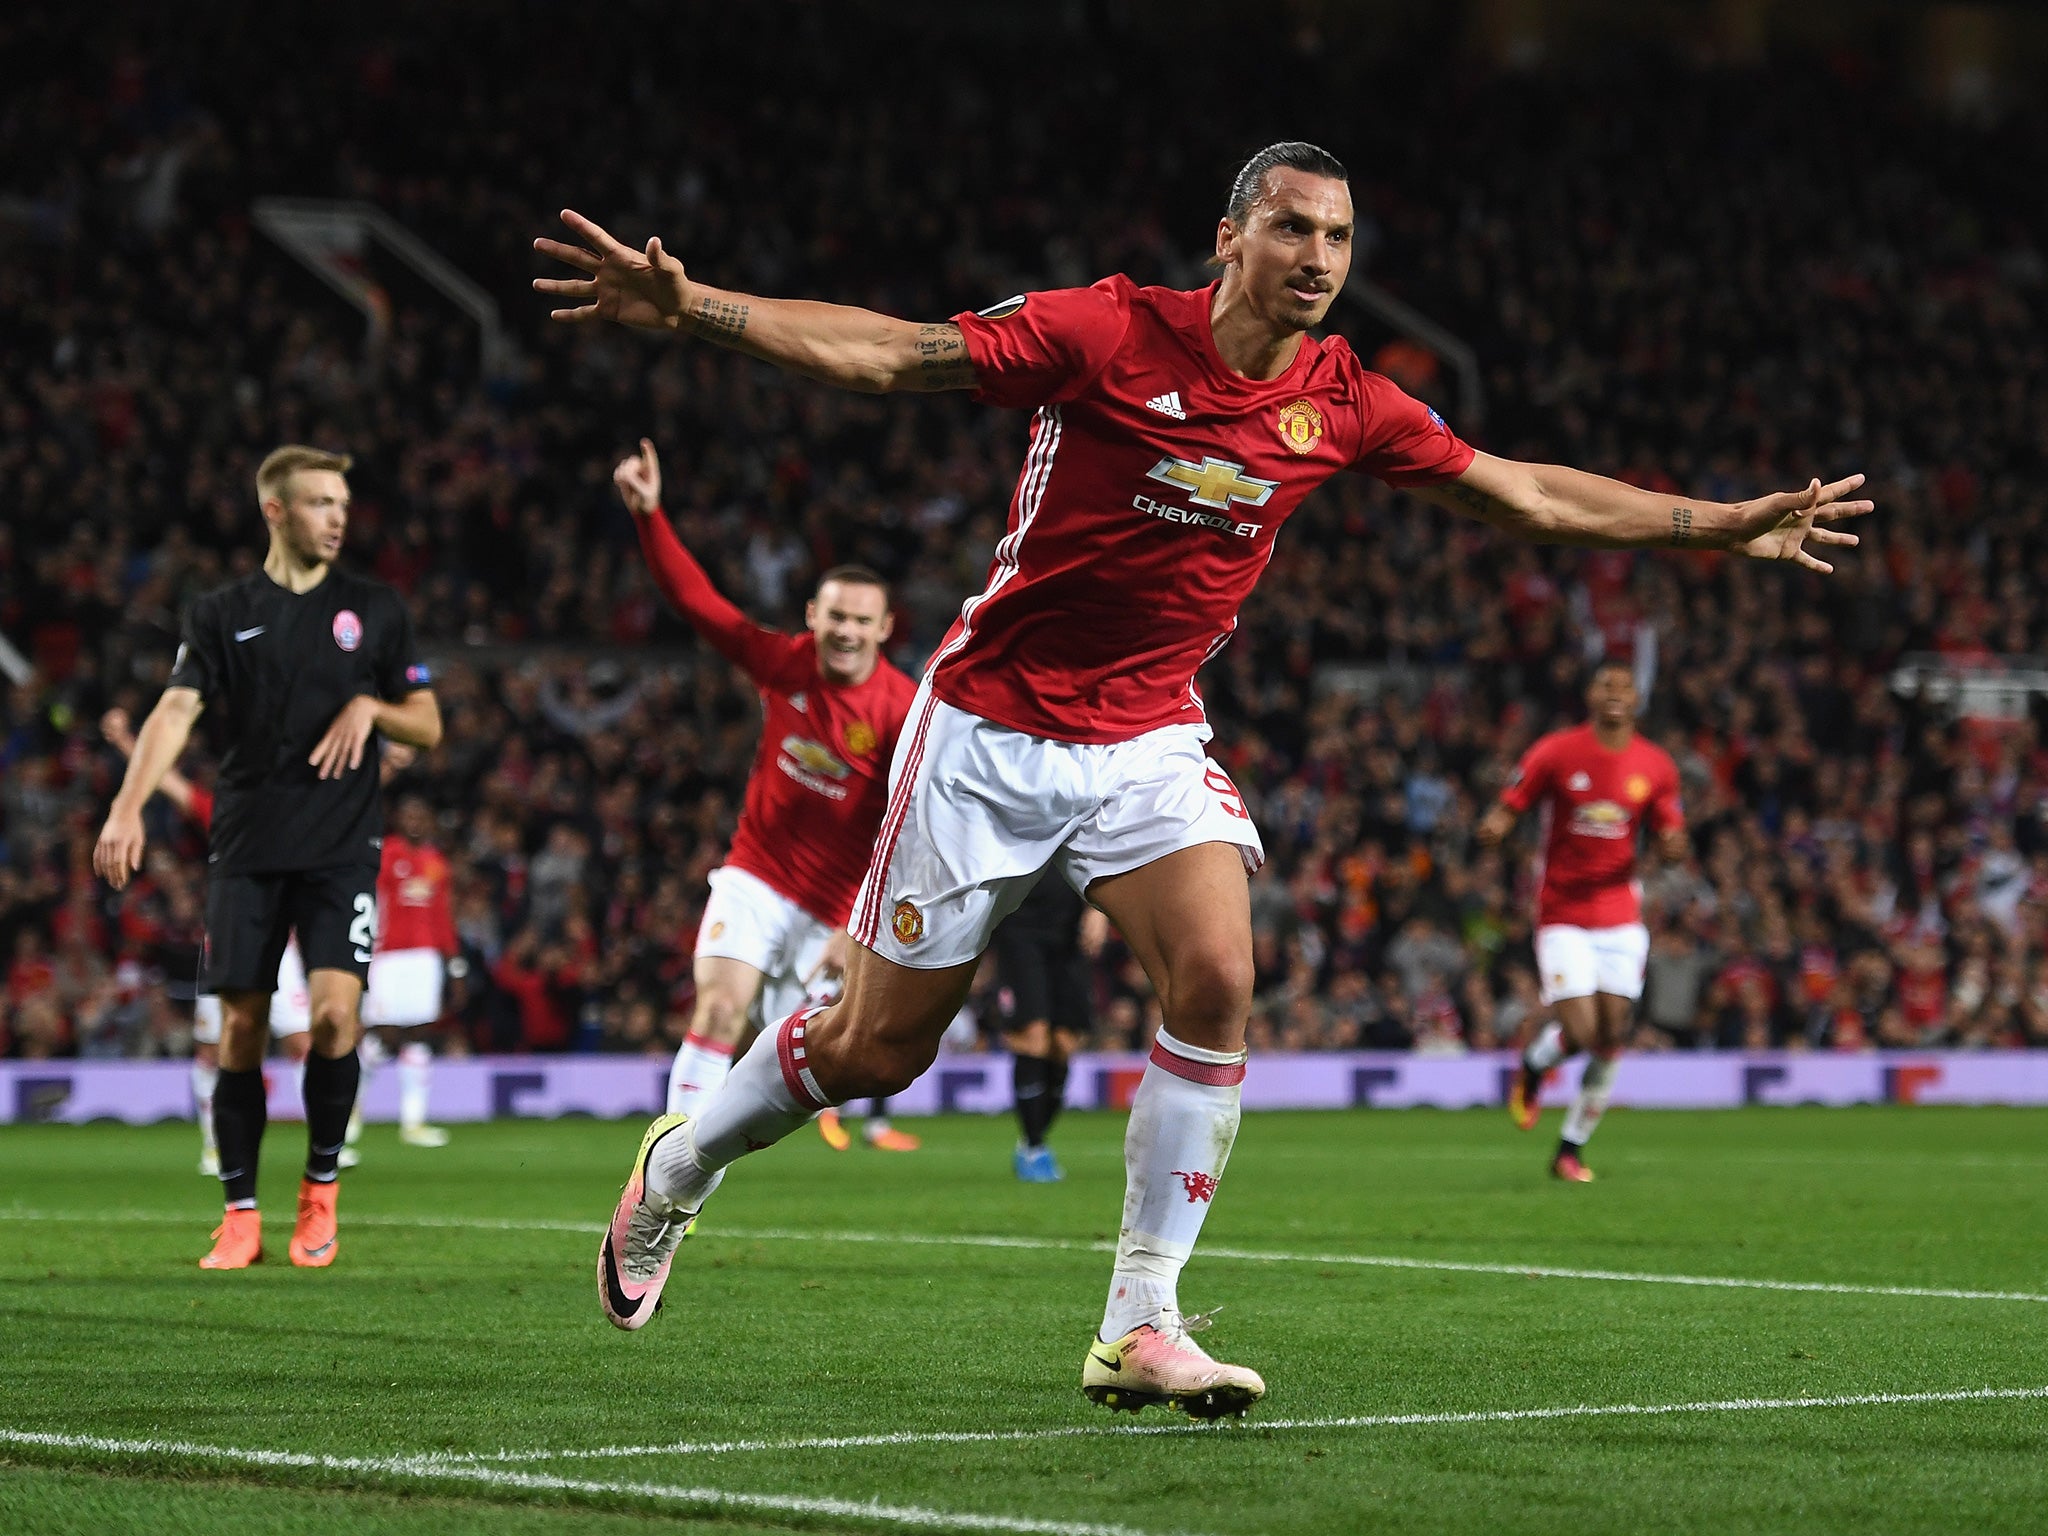 Manchester United vs Zorya match report: Zlatan Ibrahimovic saves Jose Mourinho's side from embarrassment